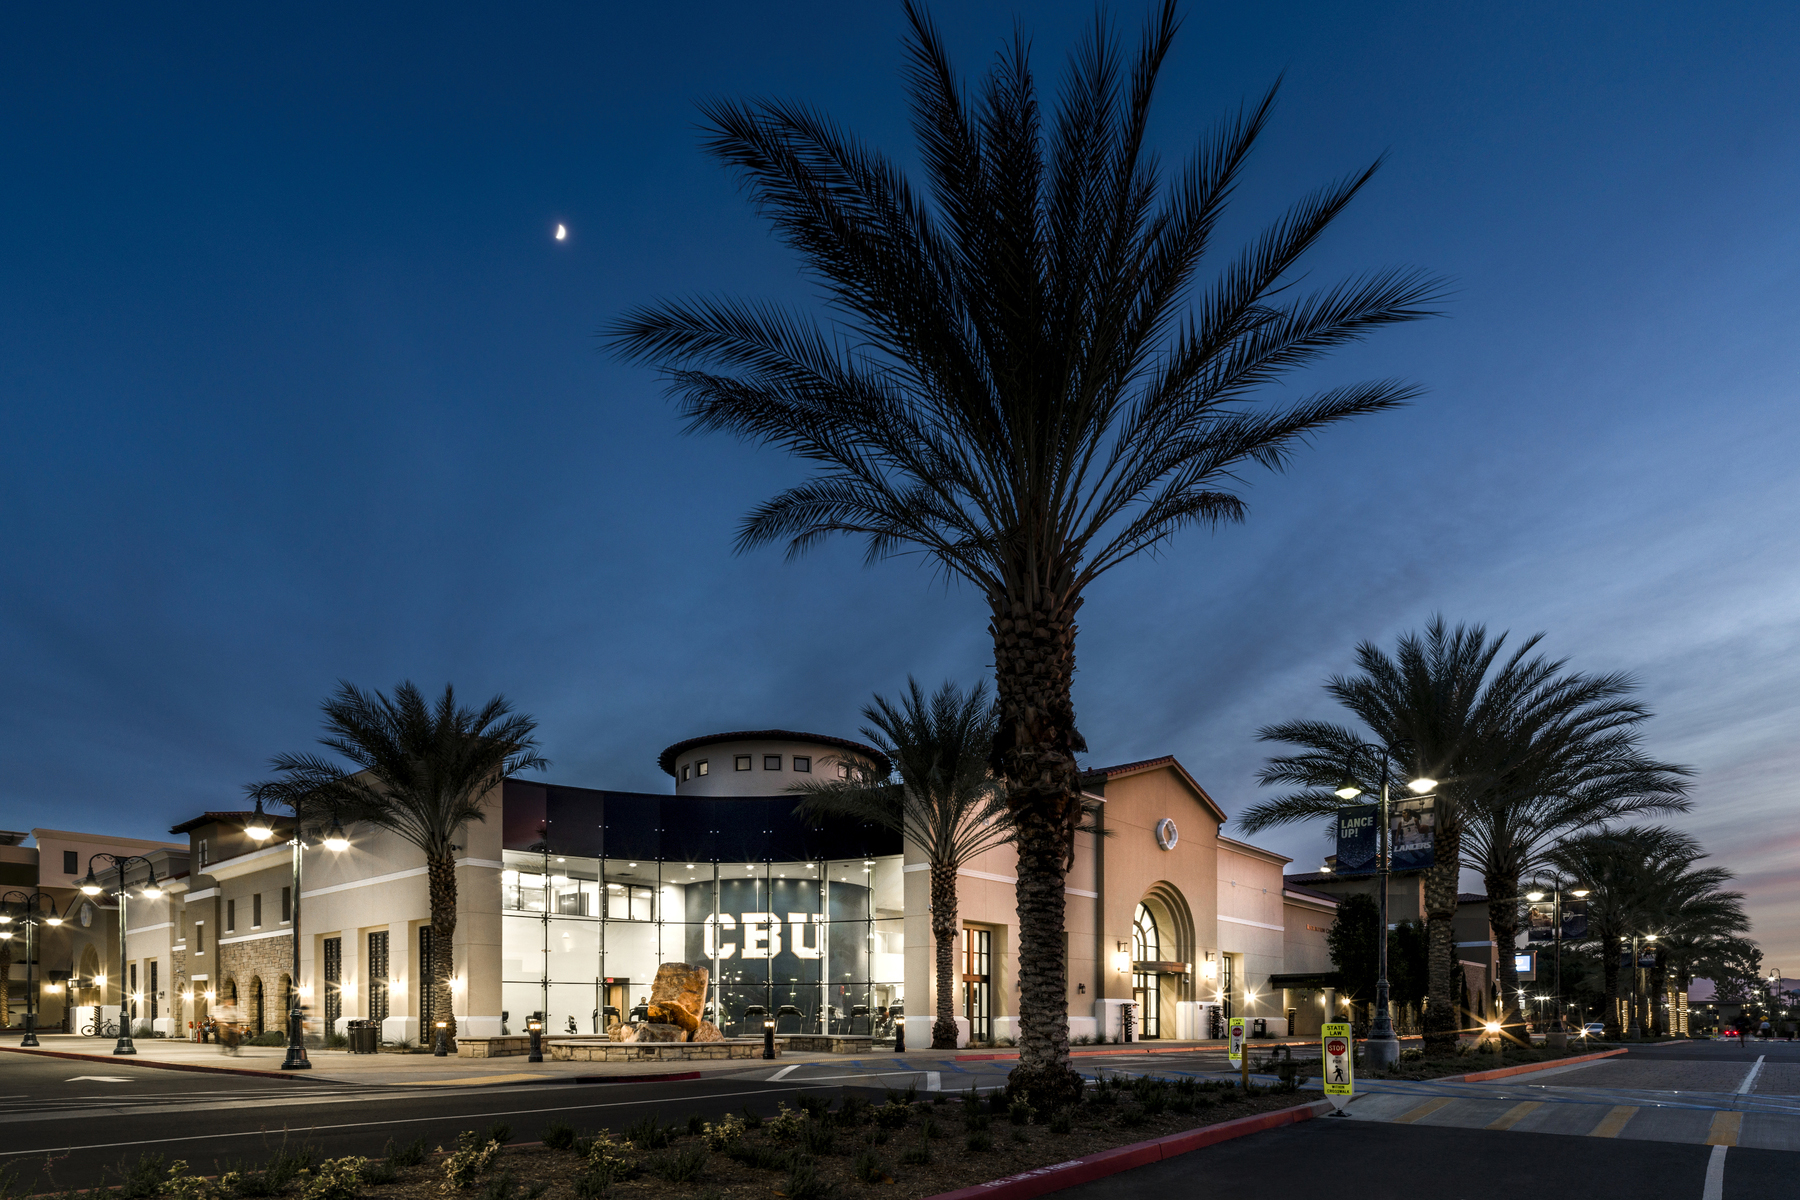 CBU's Recreation Center at night